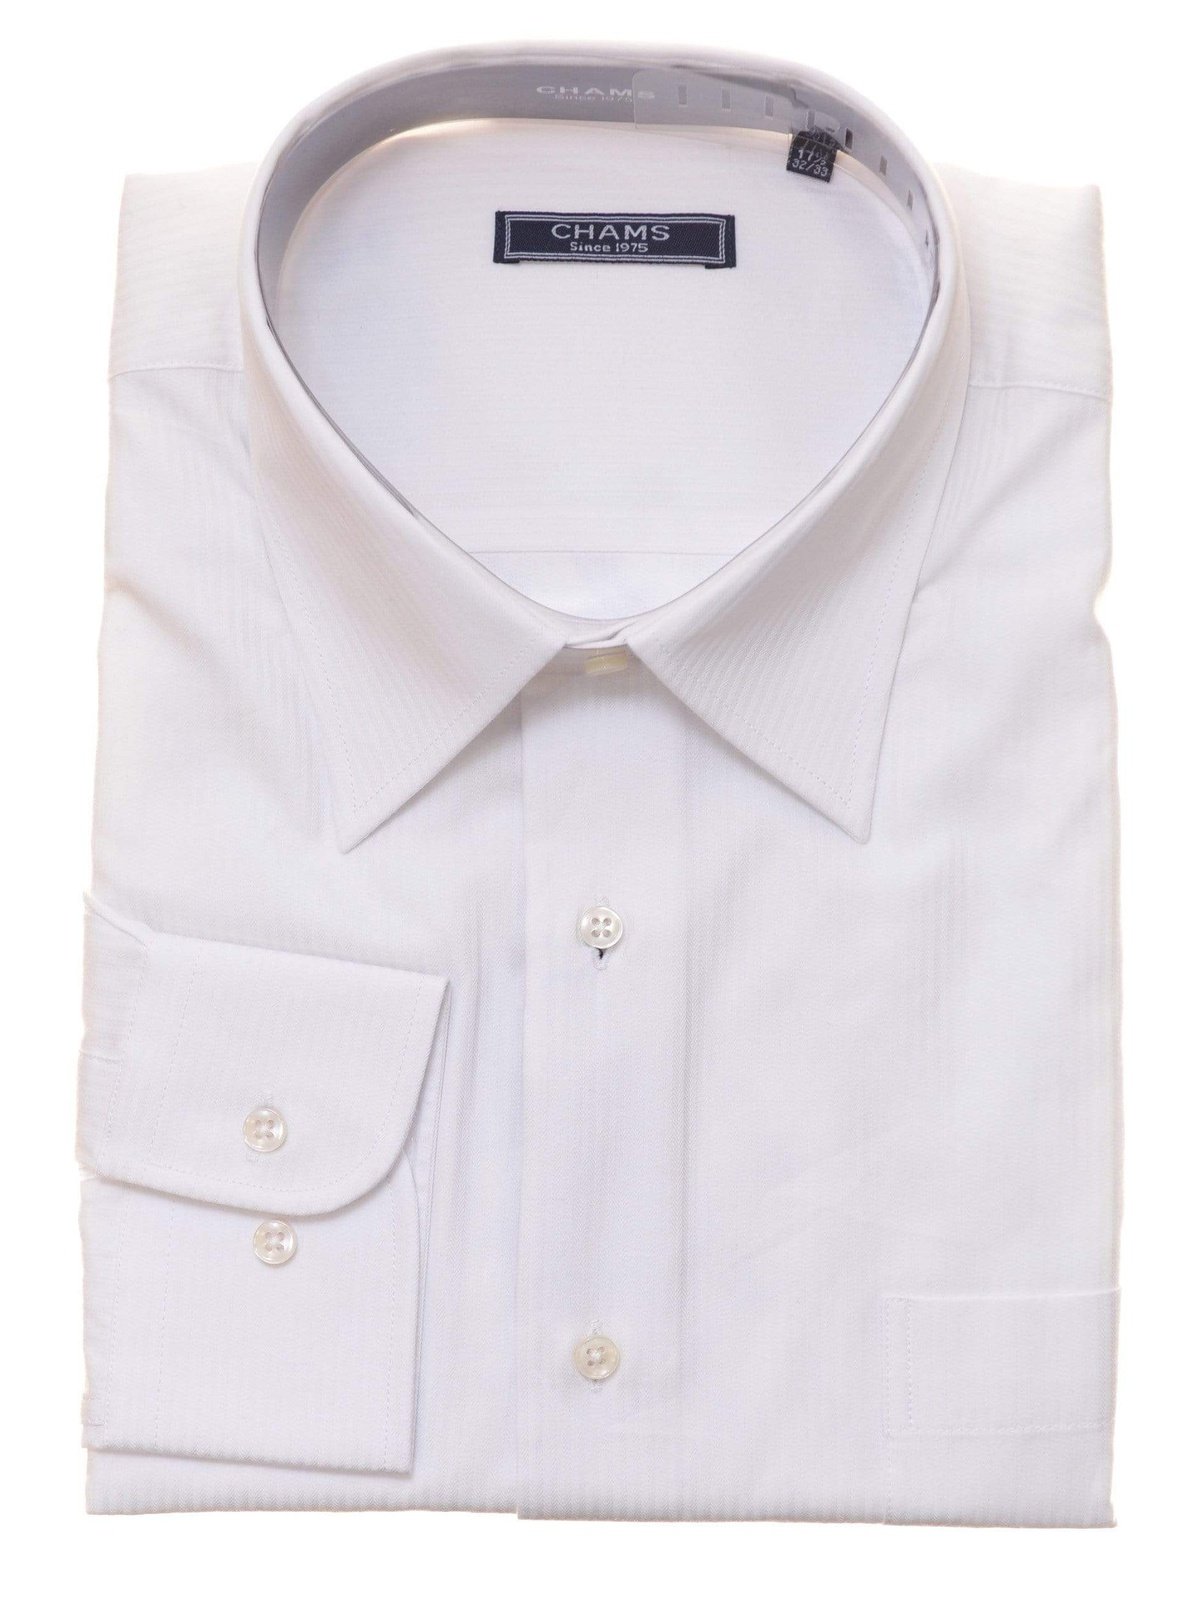 Chams SHIRTS 14 1/2 32/33 Chams Classic Fit White Tonal Pinstriped Soft Cotton Dress Shirt